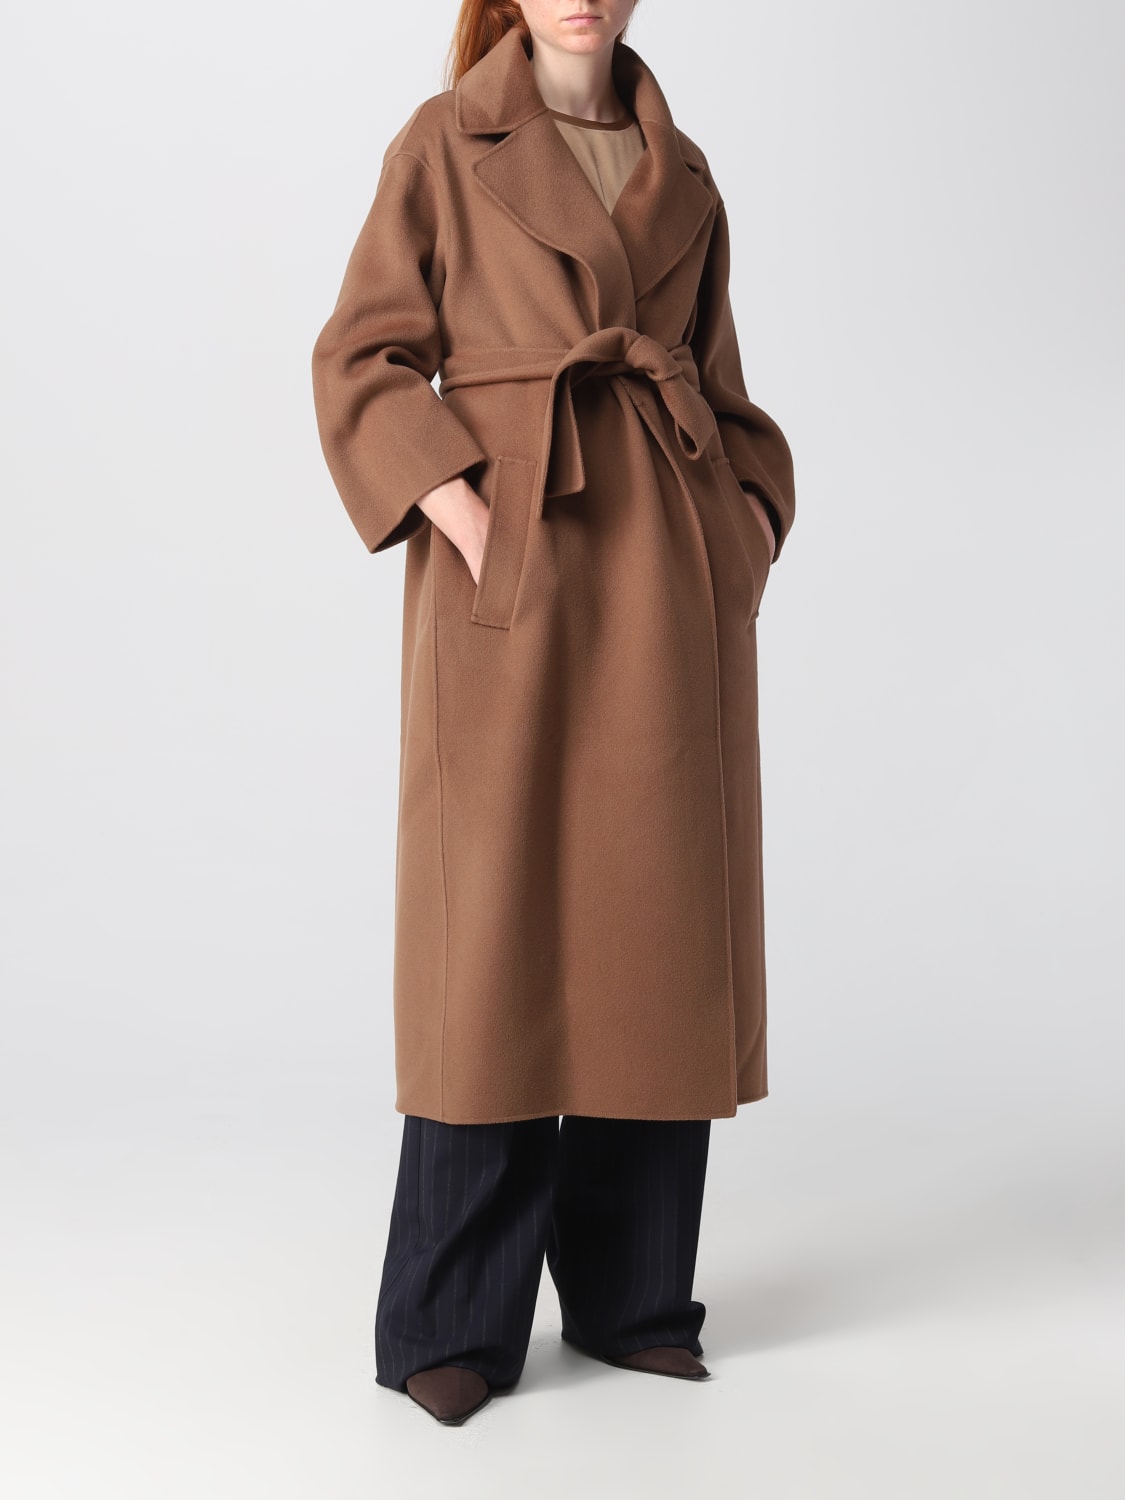 'S MAX MARA: S Max Mara Venice coat in wool - Leather | 'S Max Mara ...